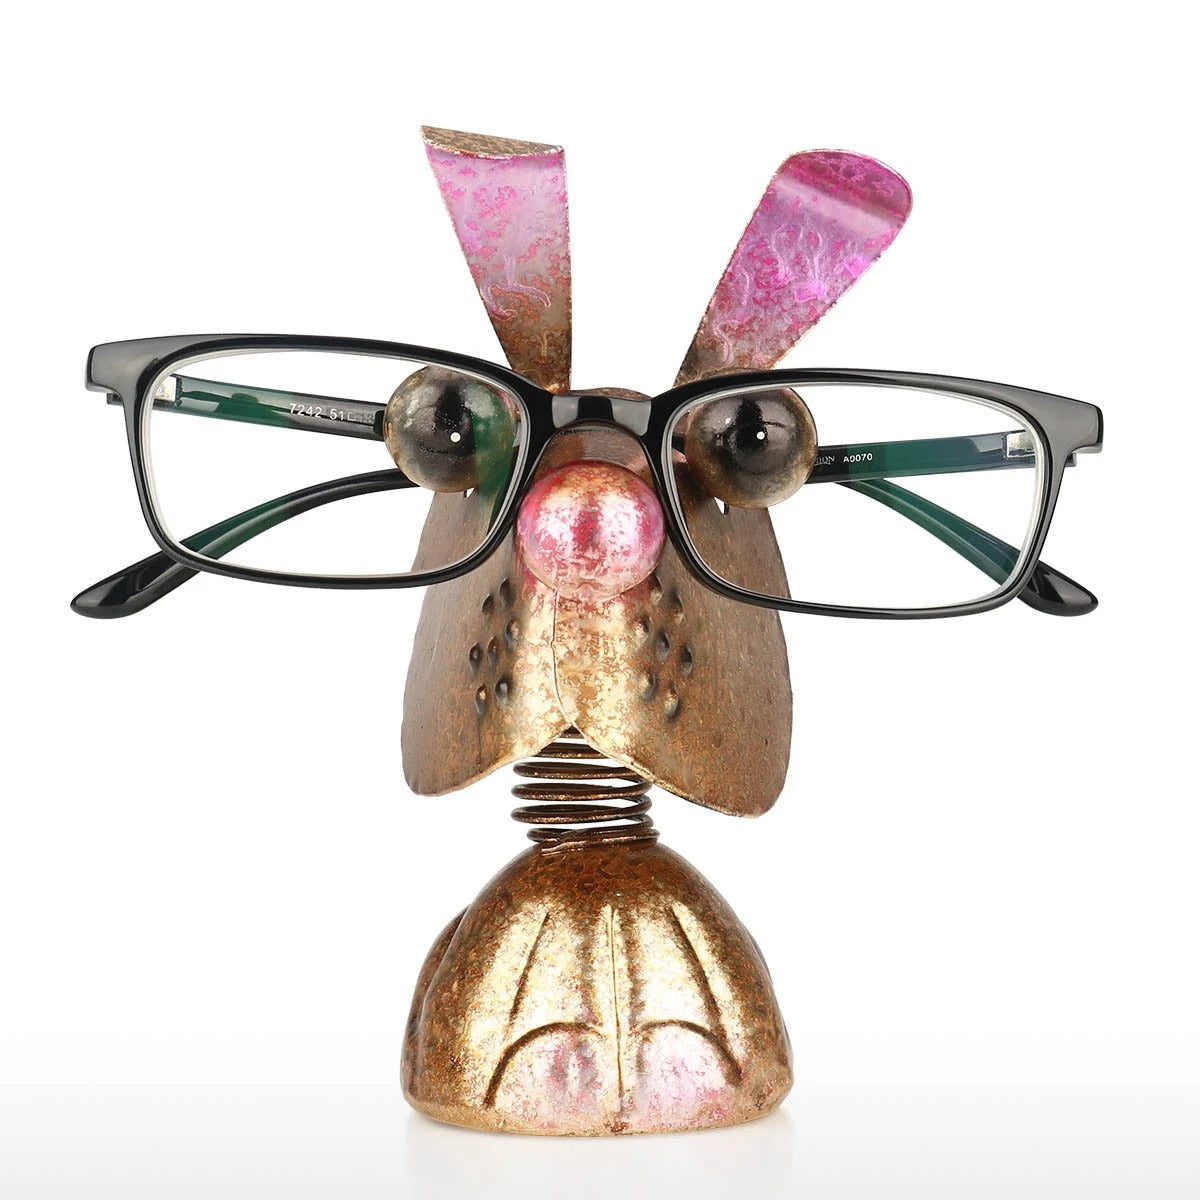 Eyeglass Rack with Rabbit Figurine Ornament to Desktop Accessories and Desktop Organizer